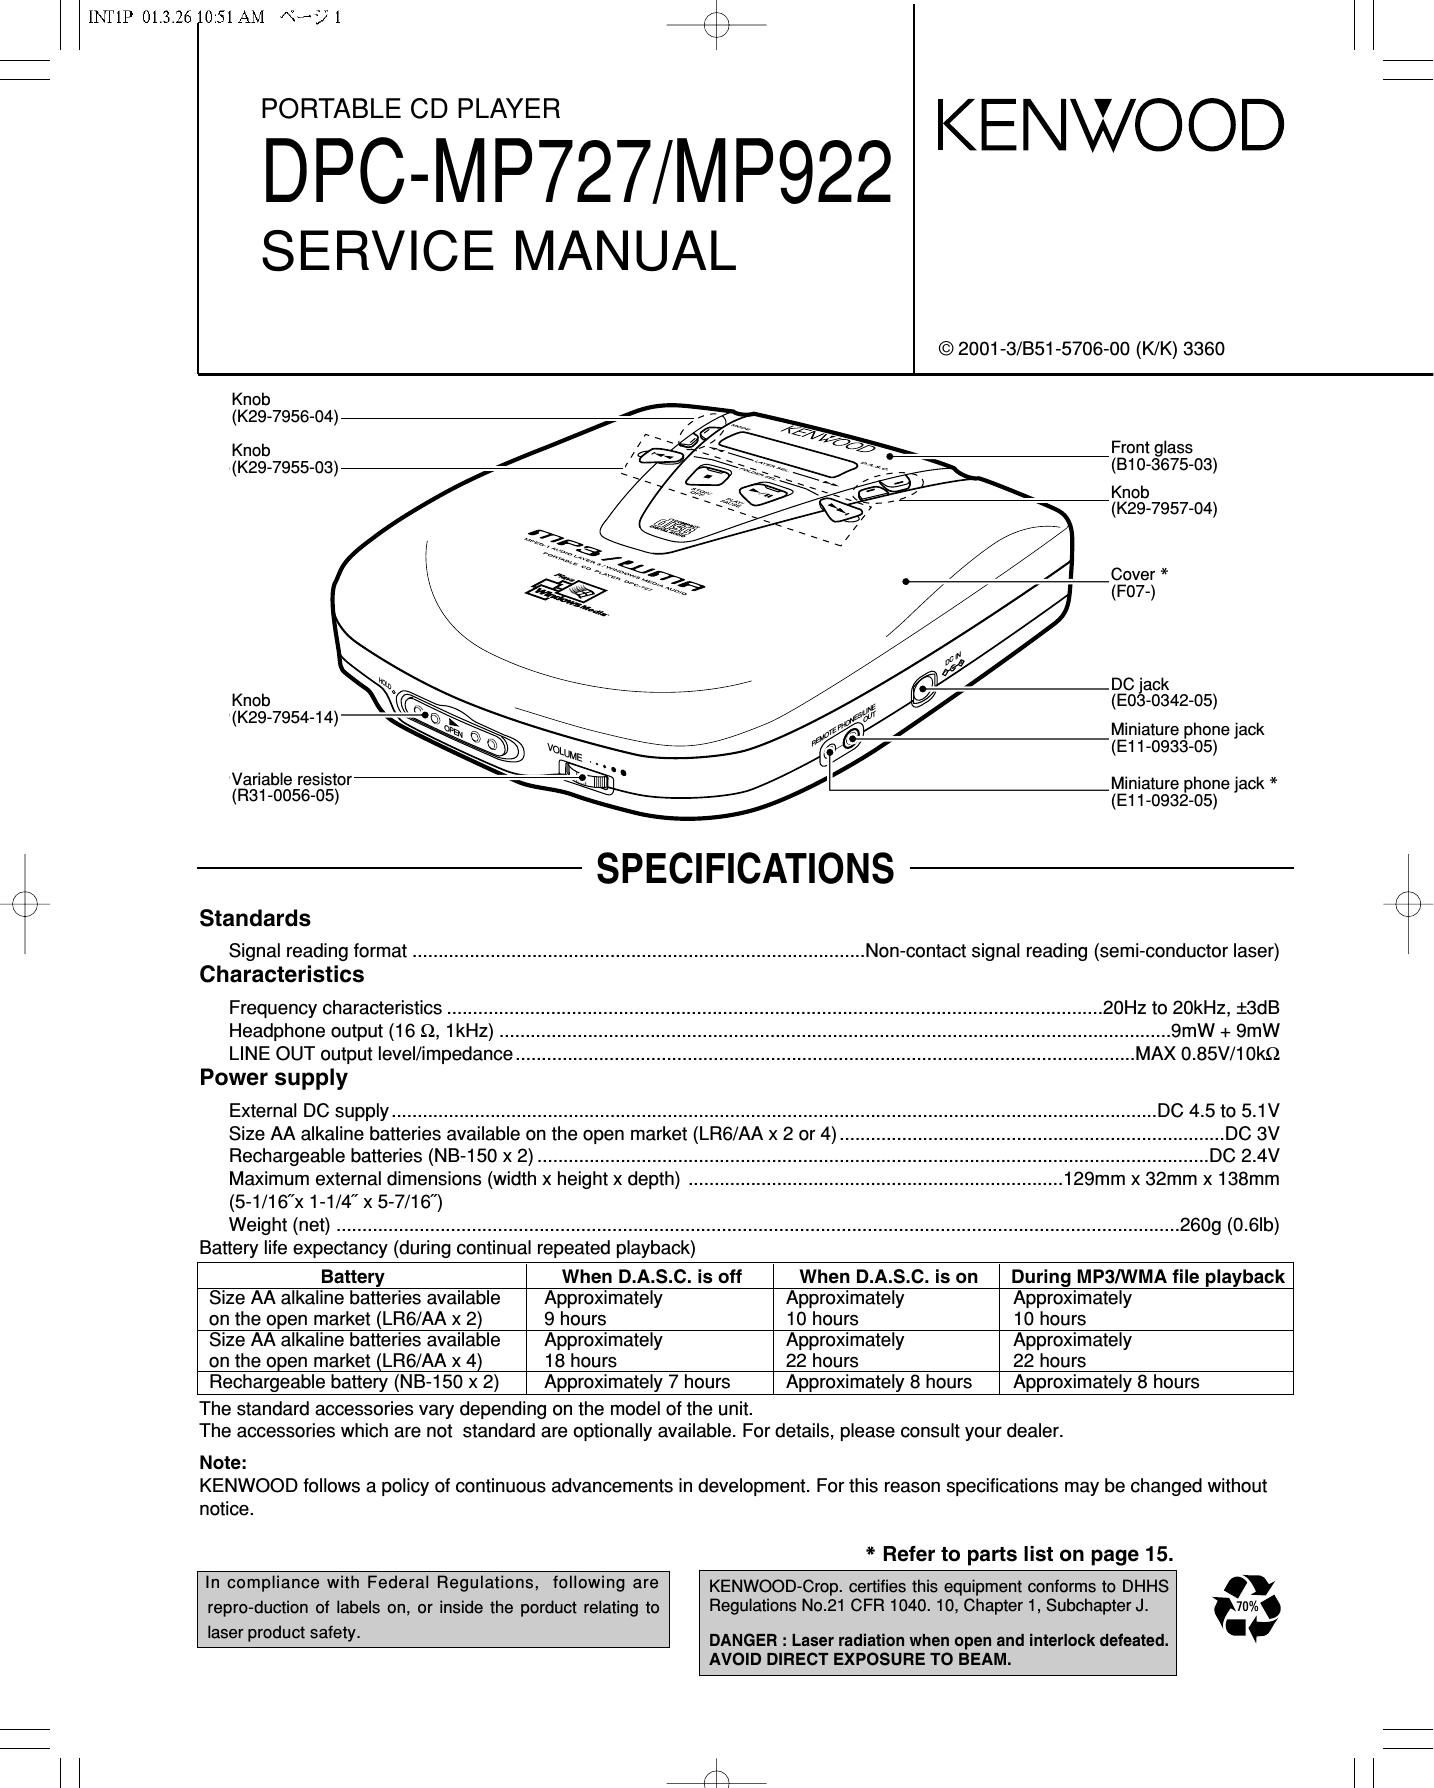 Kenwood DPCMP 922 Service Manual